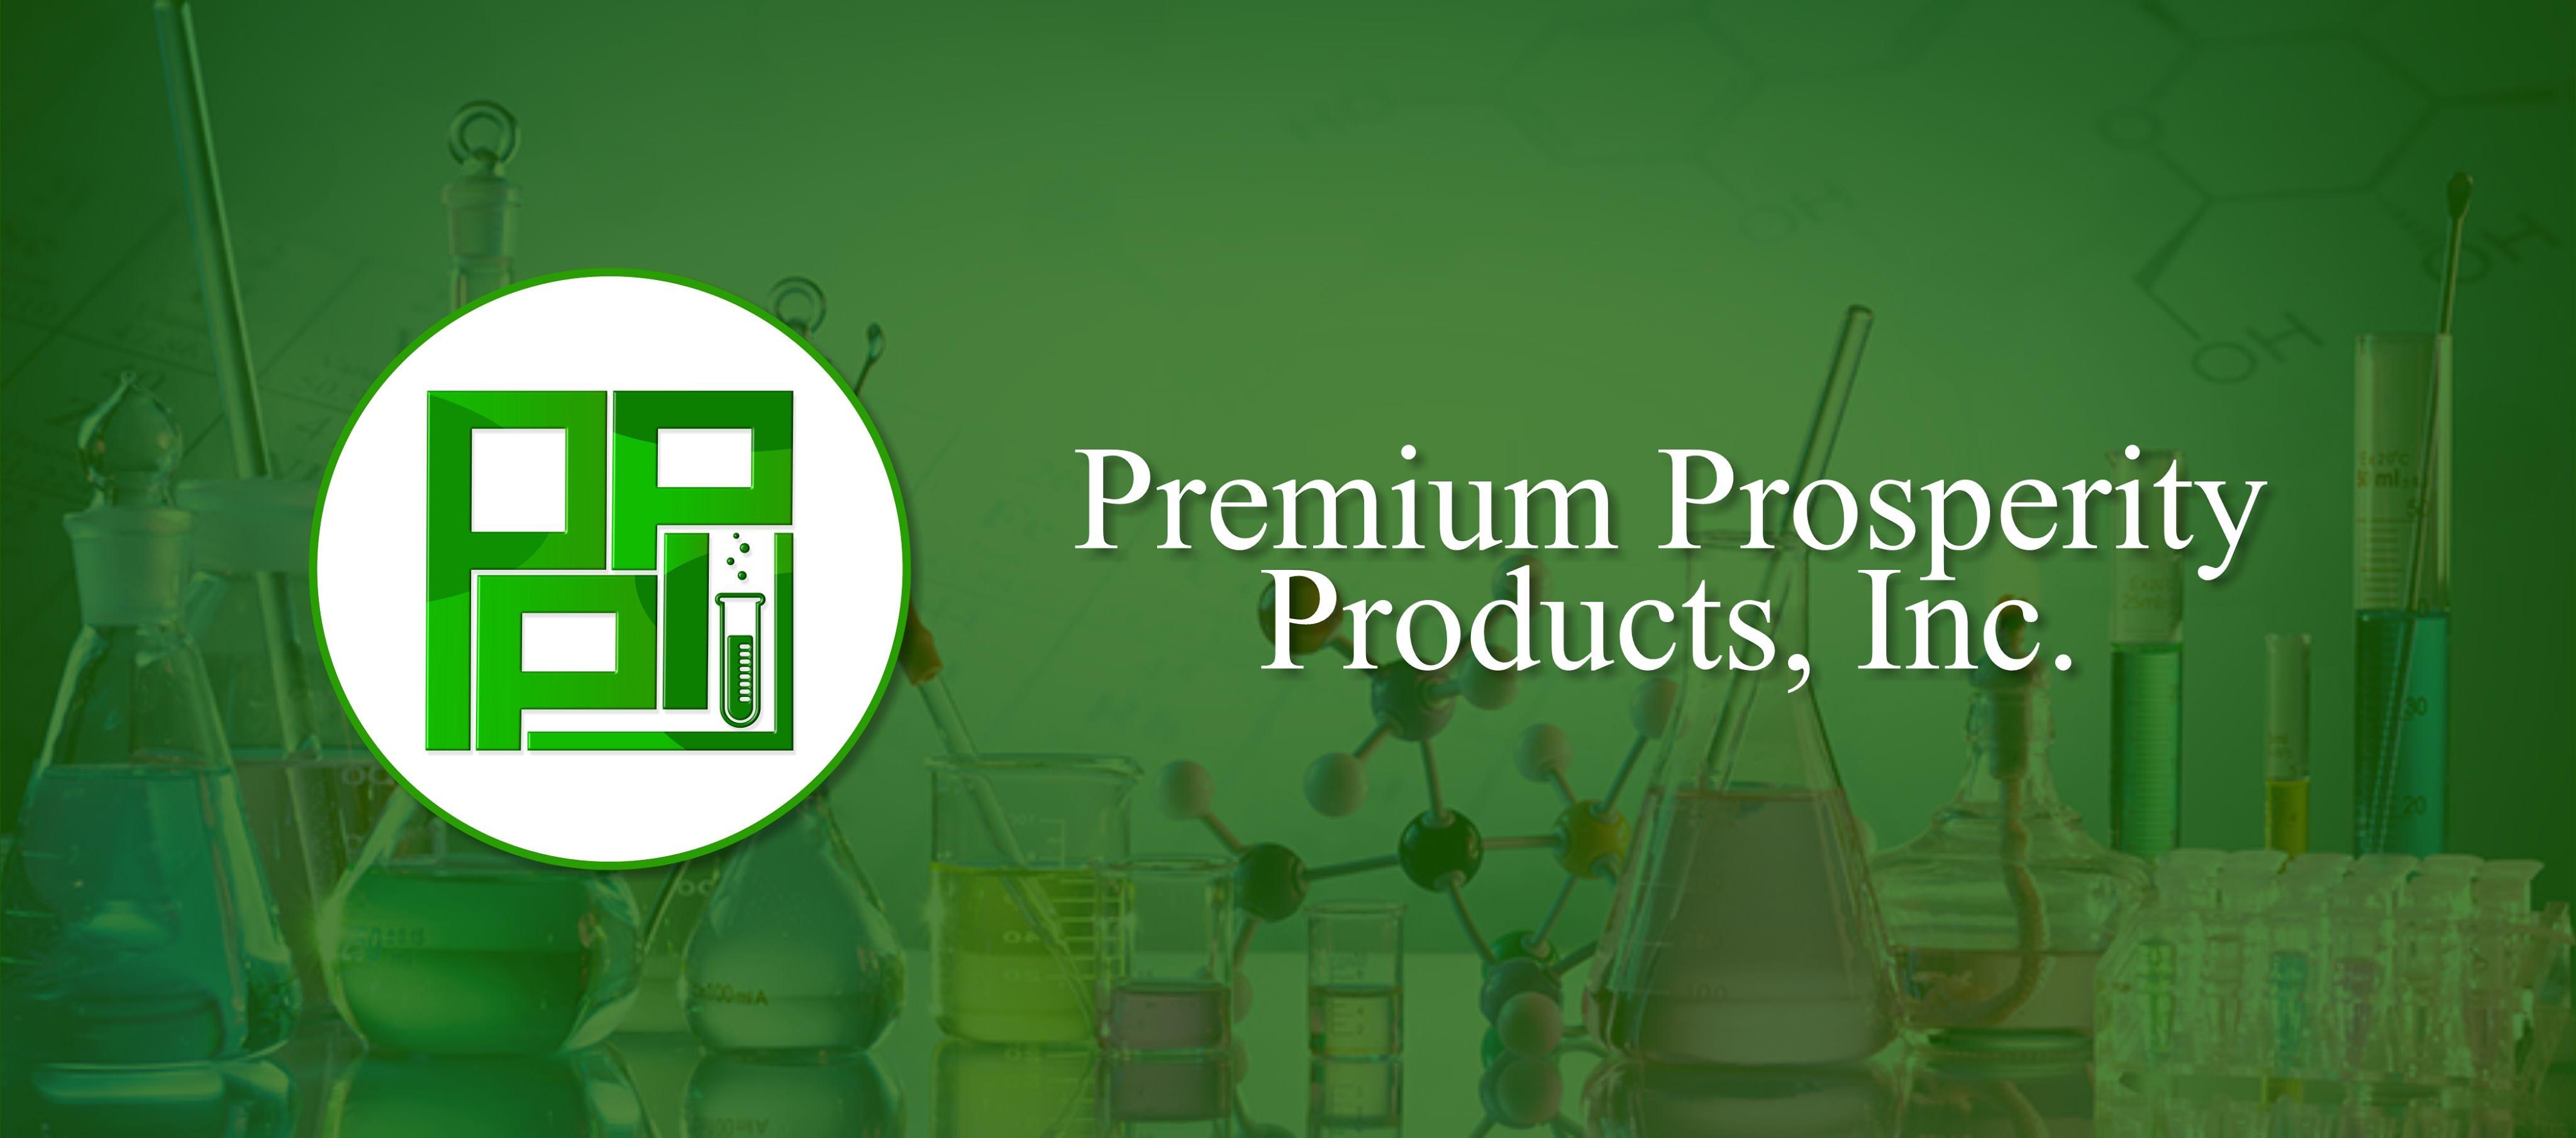 Premium Prosperity Products Inc.